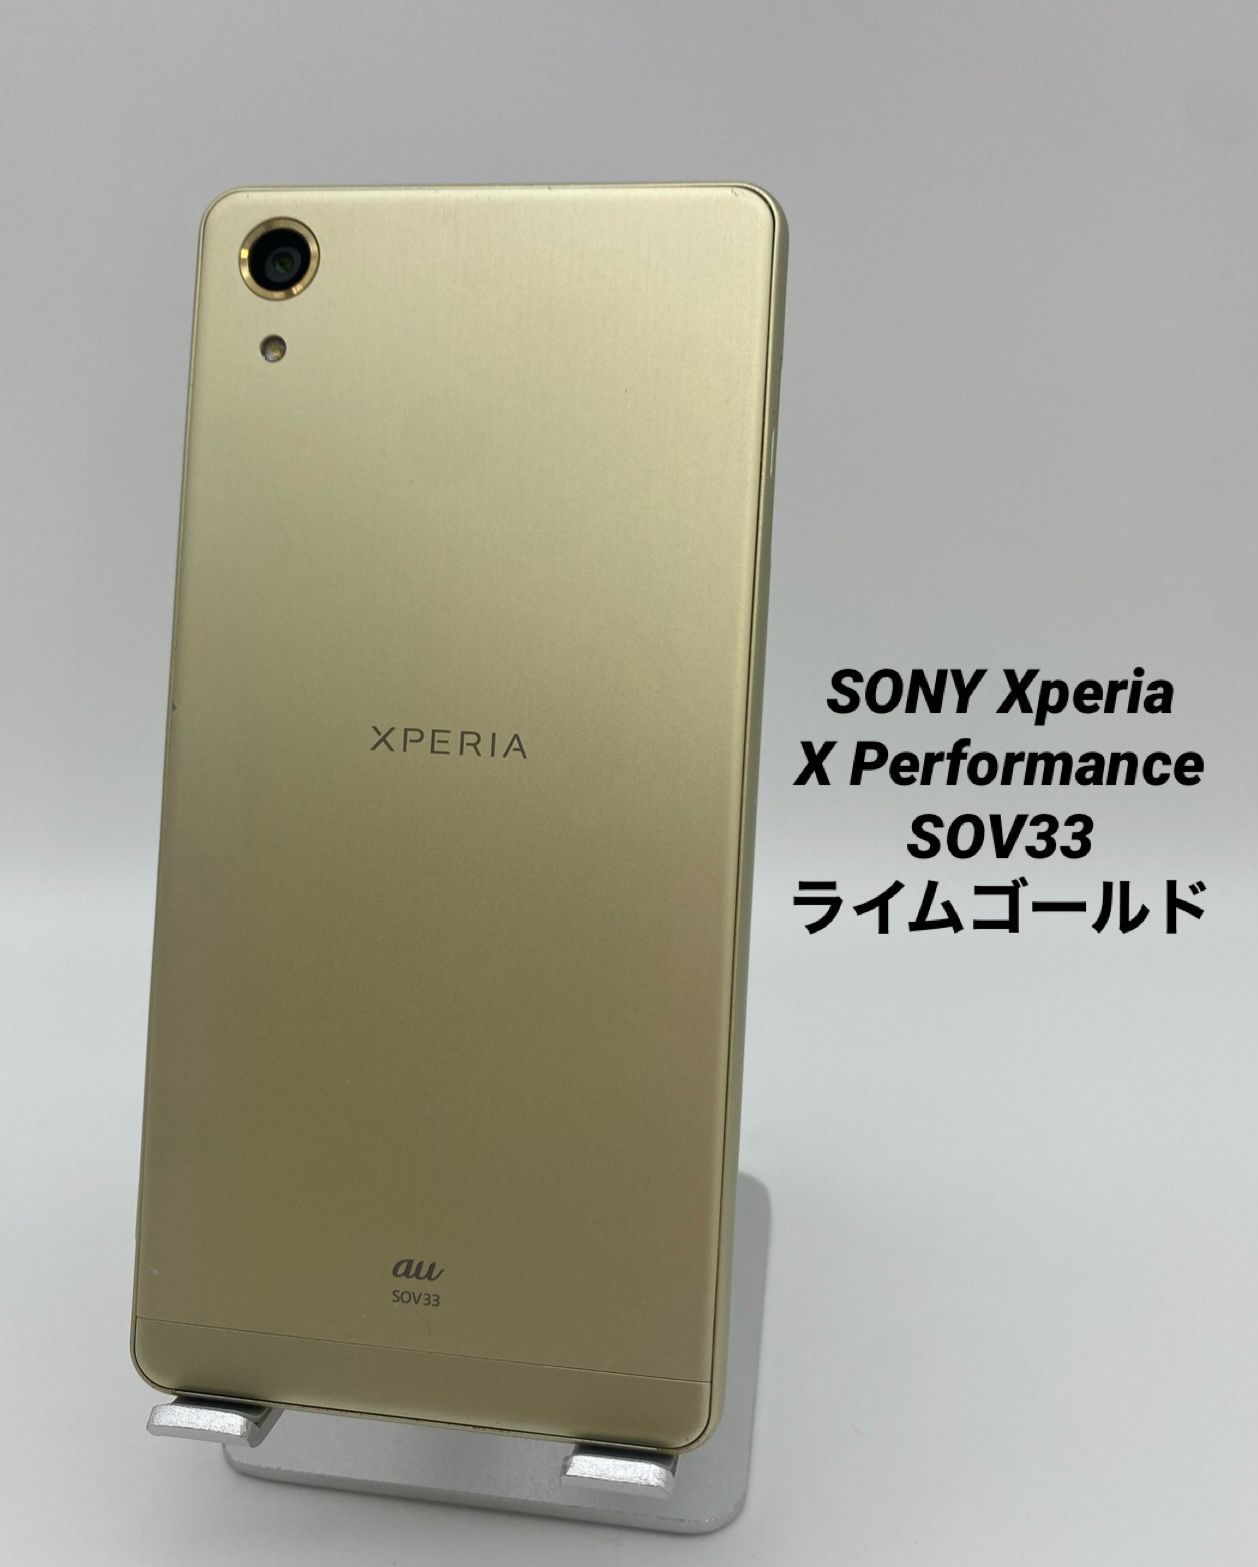 SONY Xperia X Performance /SOV33/ライムゴールド/KDDI A0016